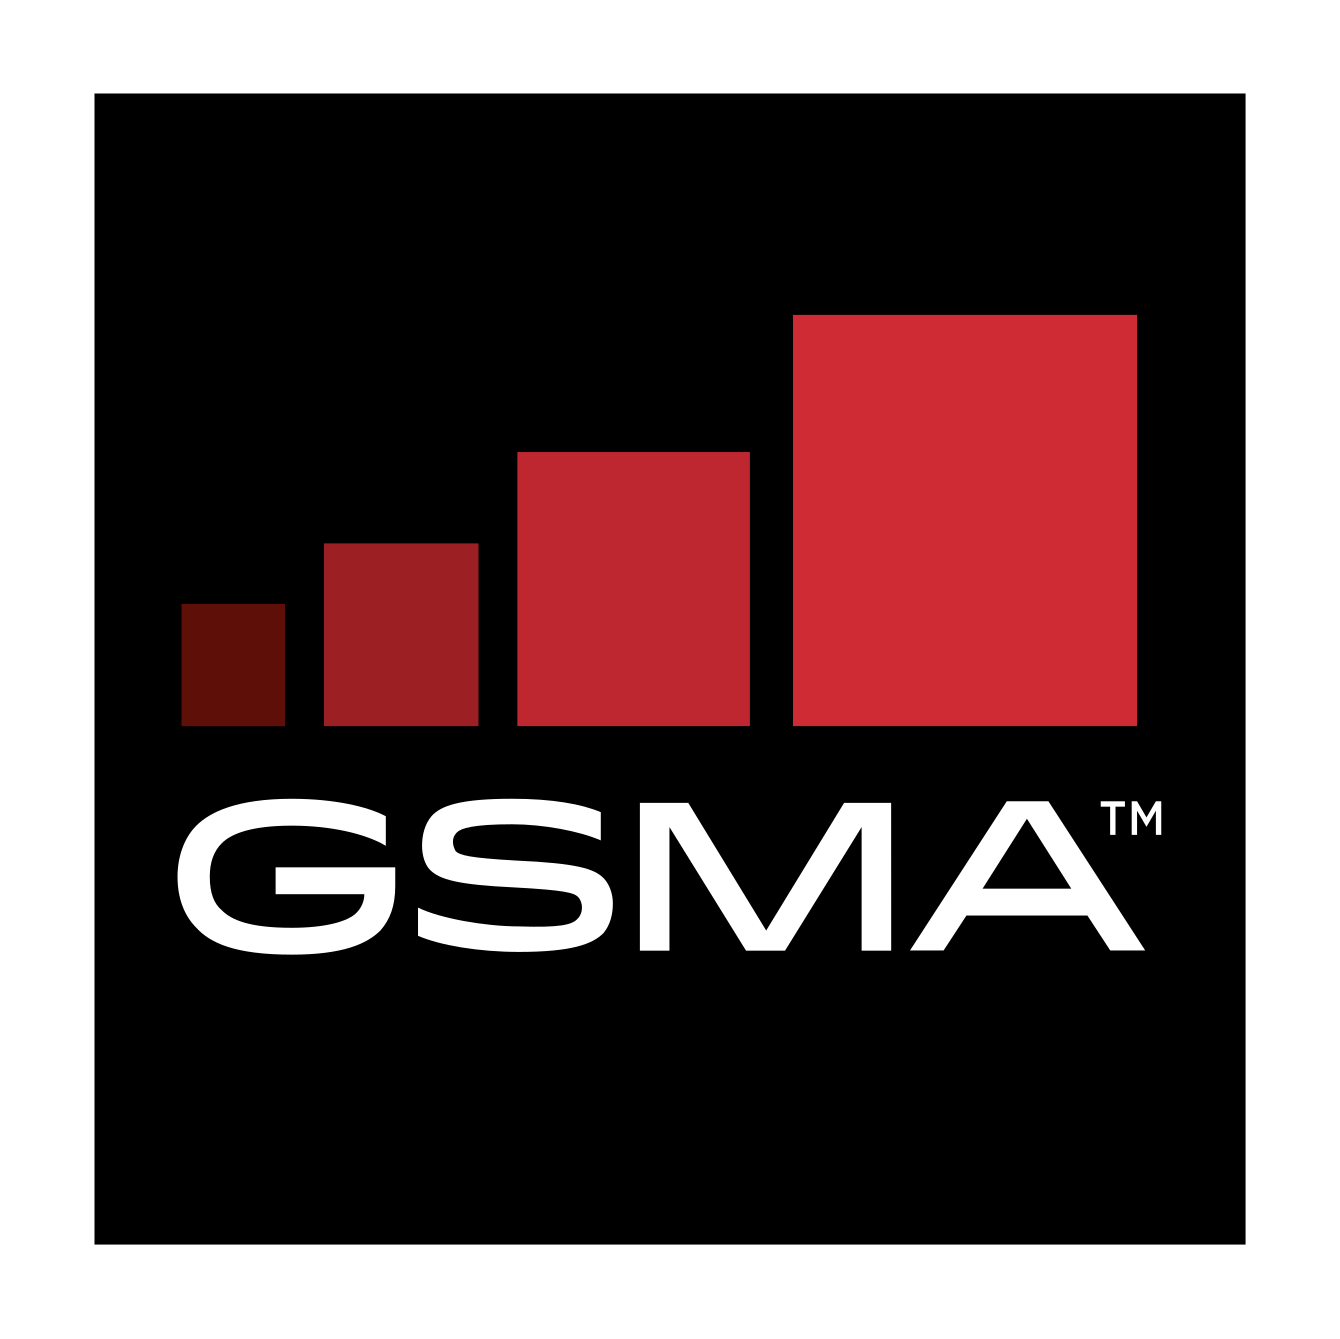 GSM Association logo